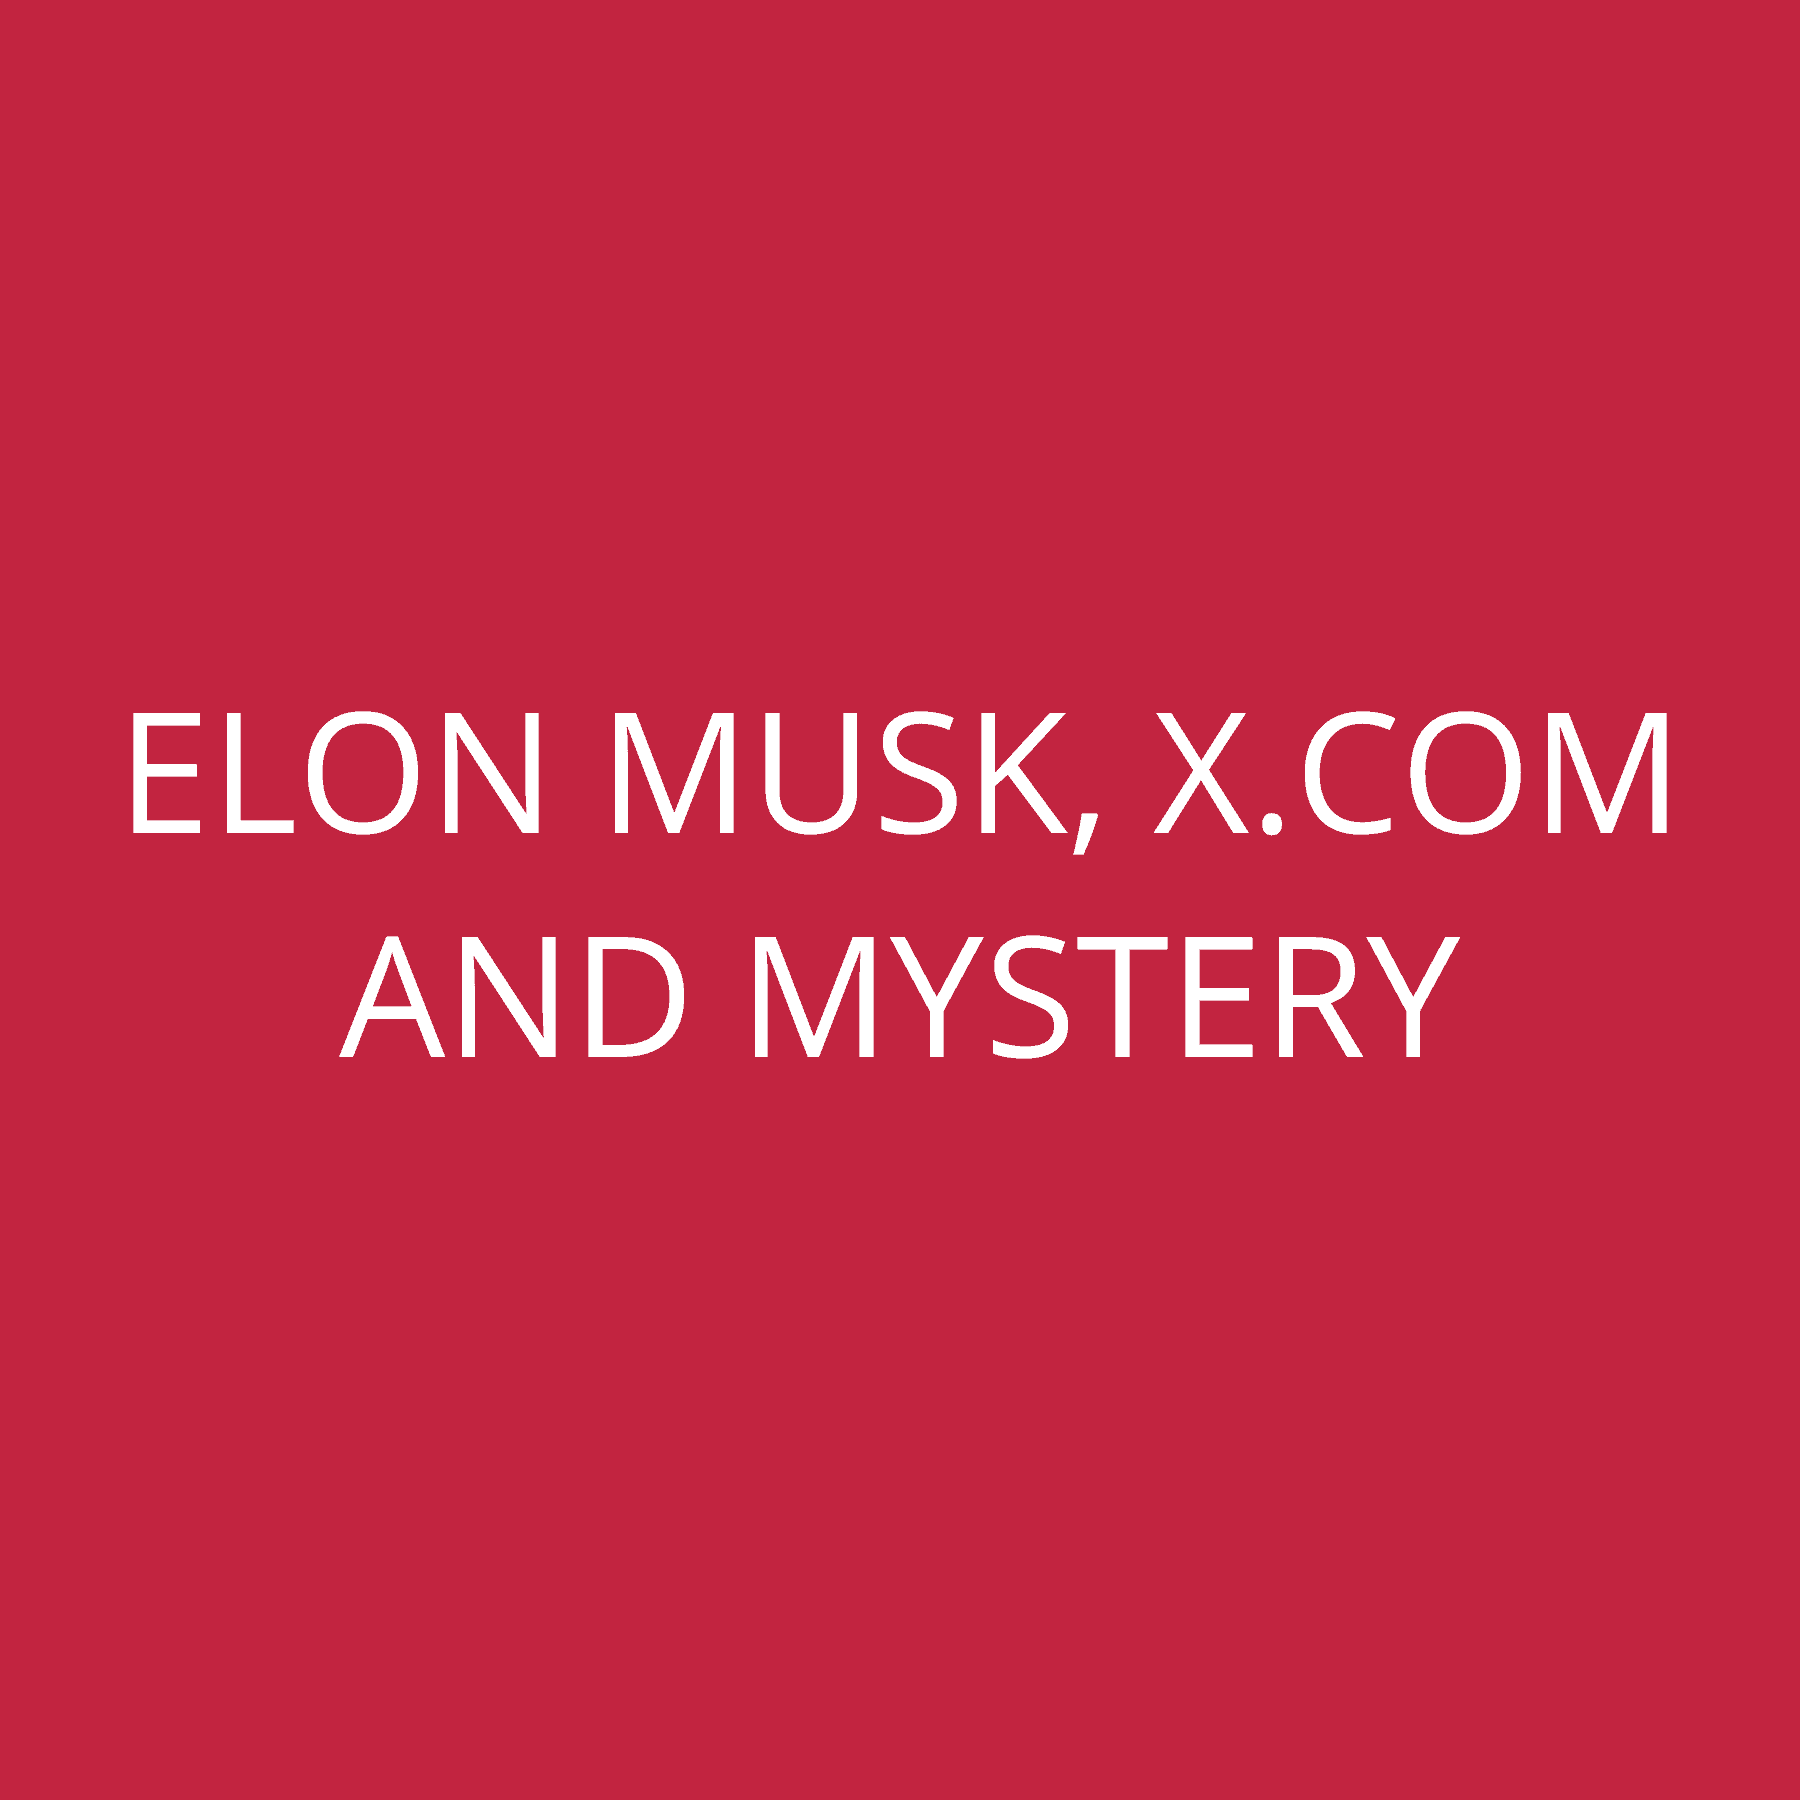 Elon Musk, X.com and Mystery